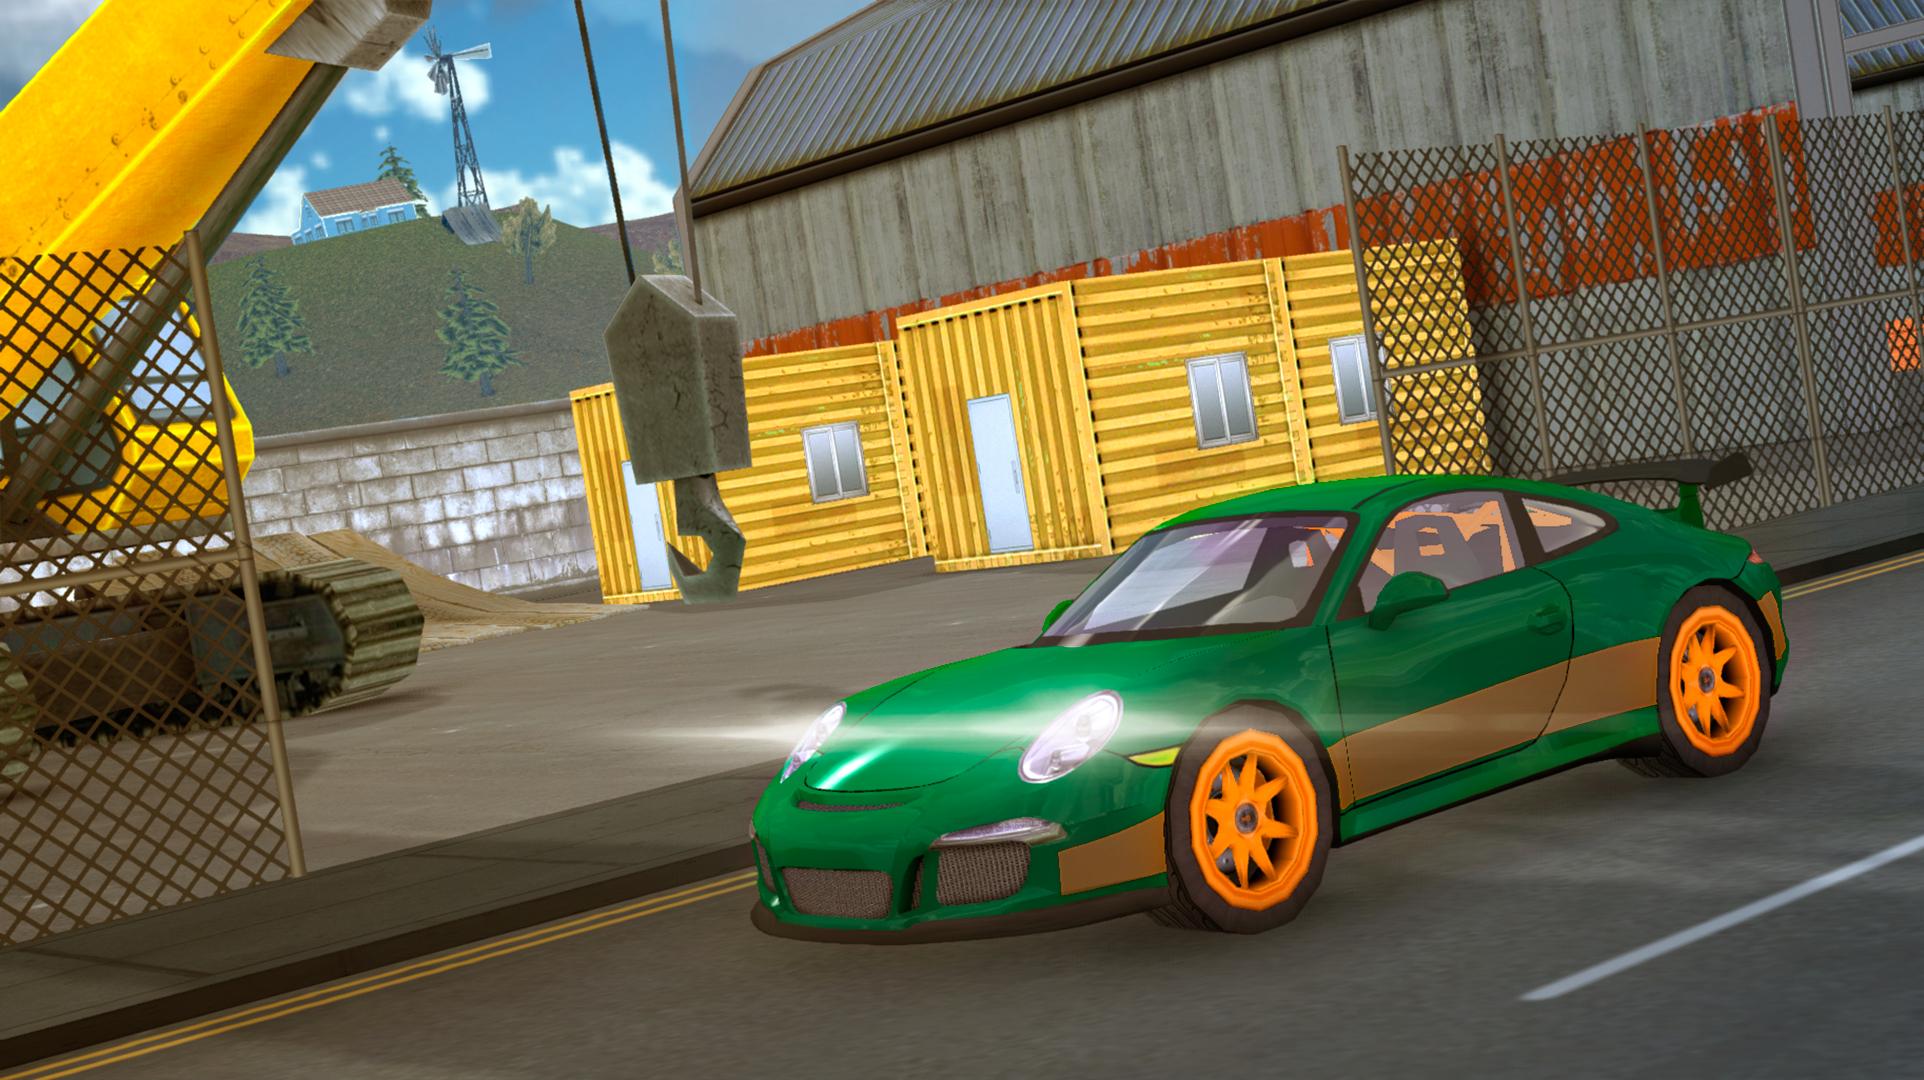 Racing Car Driving Simulator for Android - APK Download